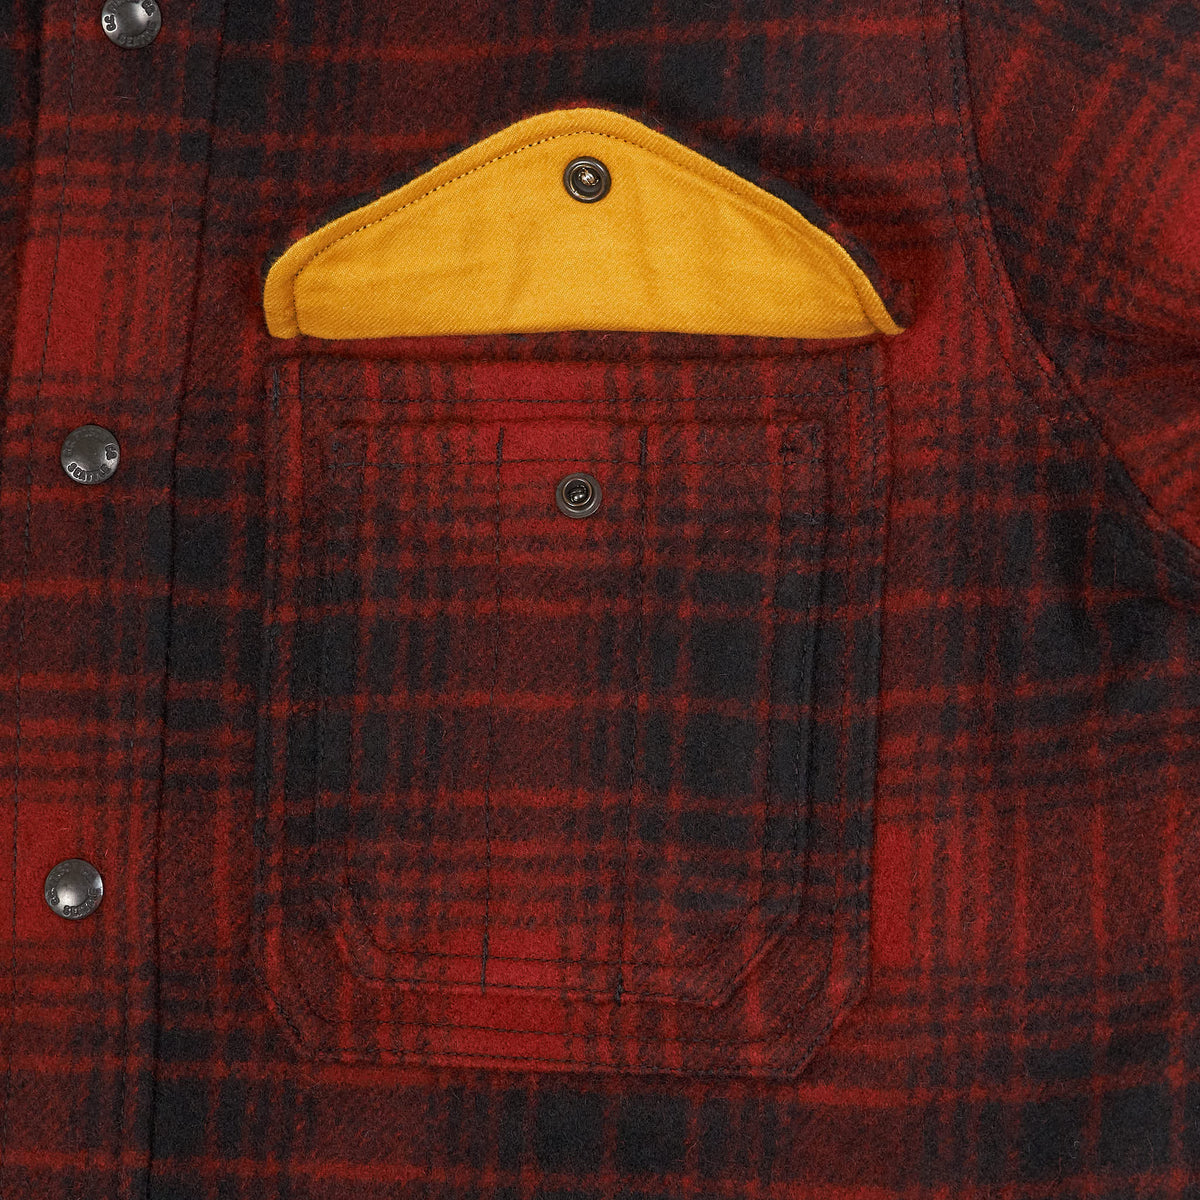 Filson Cotton Lined Wool Plaid Shirt Jacket